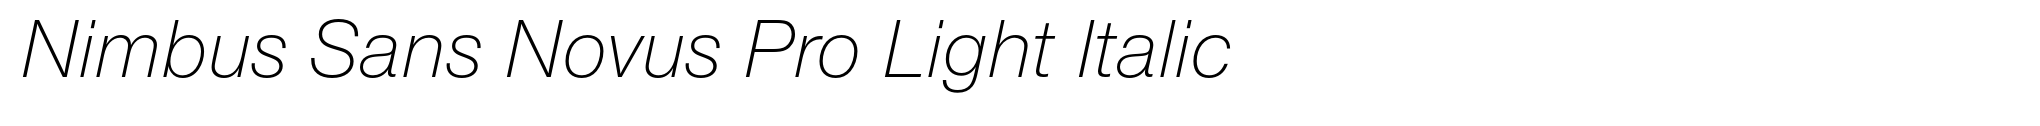 Nimbus Sans Novus Pro Light Italic image